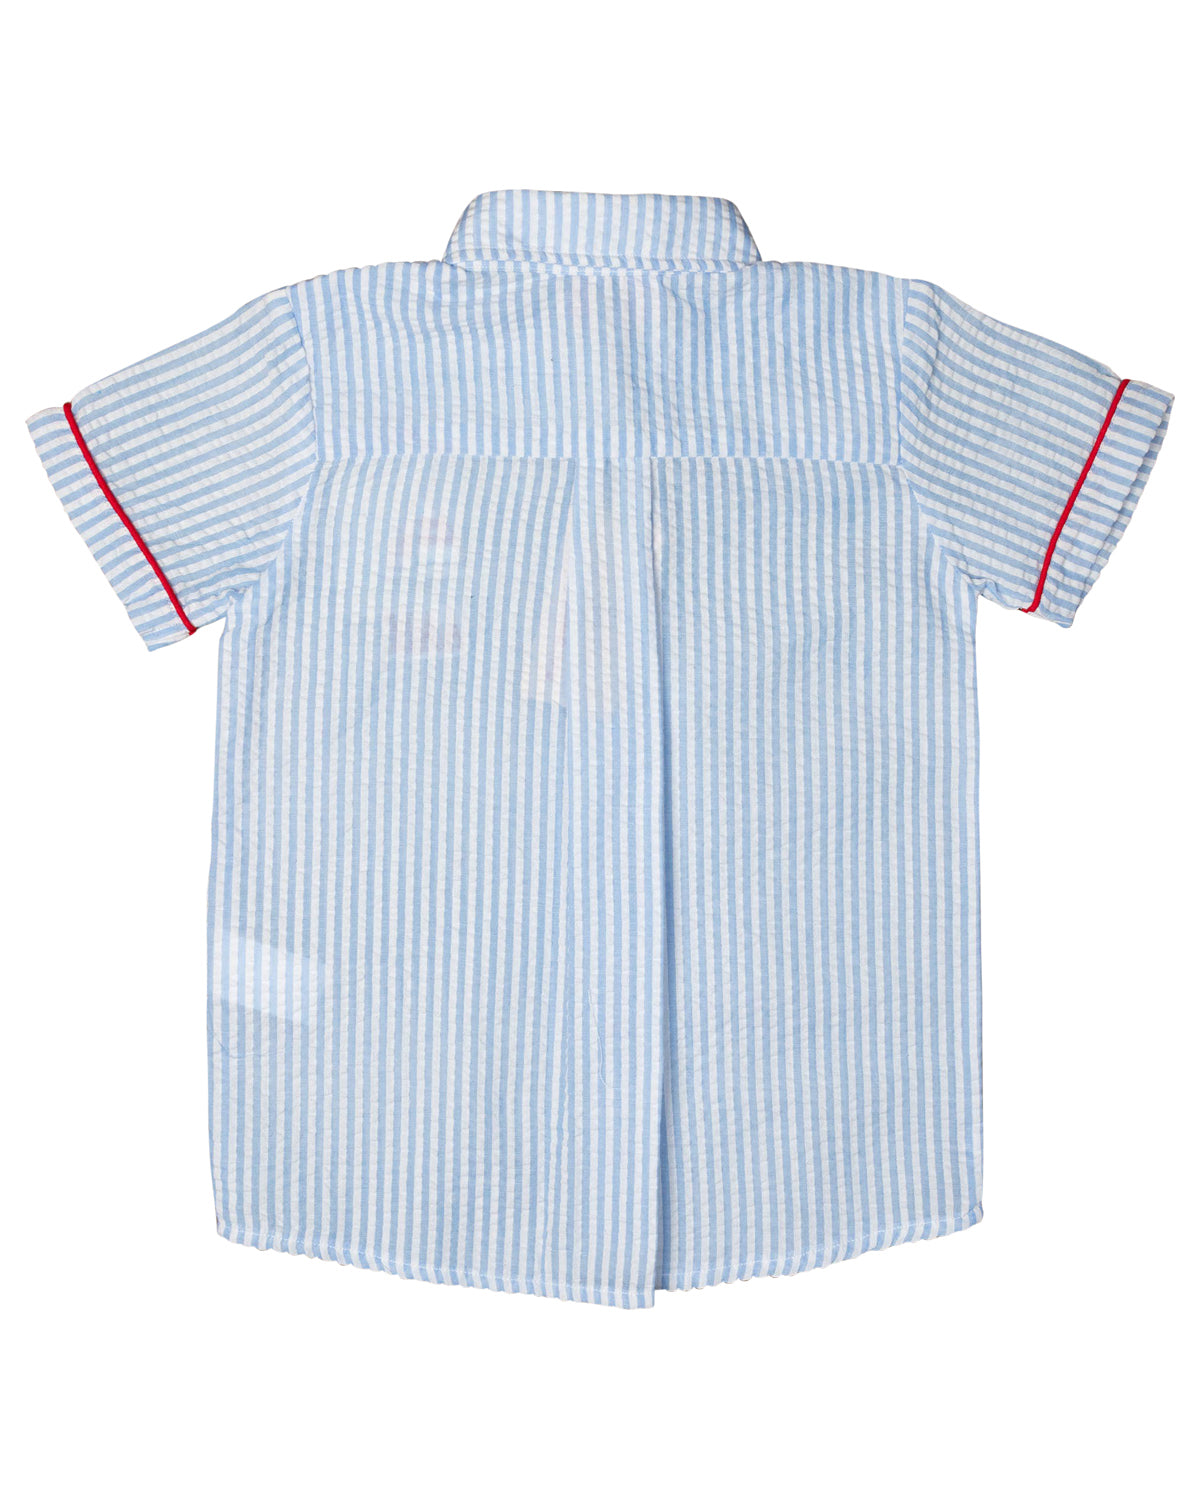 Sailboat Embroidered Blue Seersucker Shirt-FINAL SALE